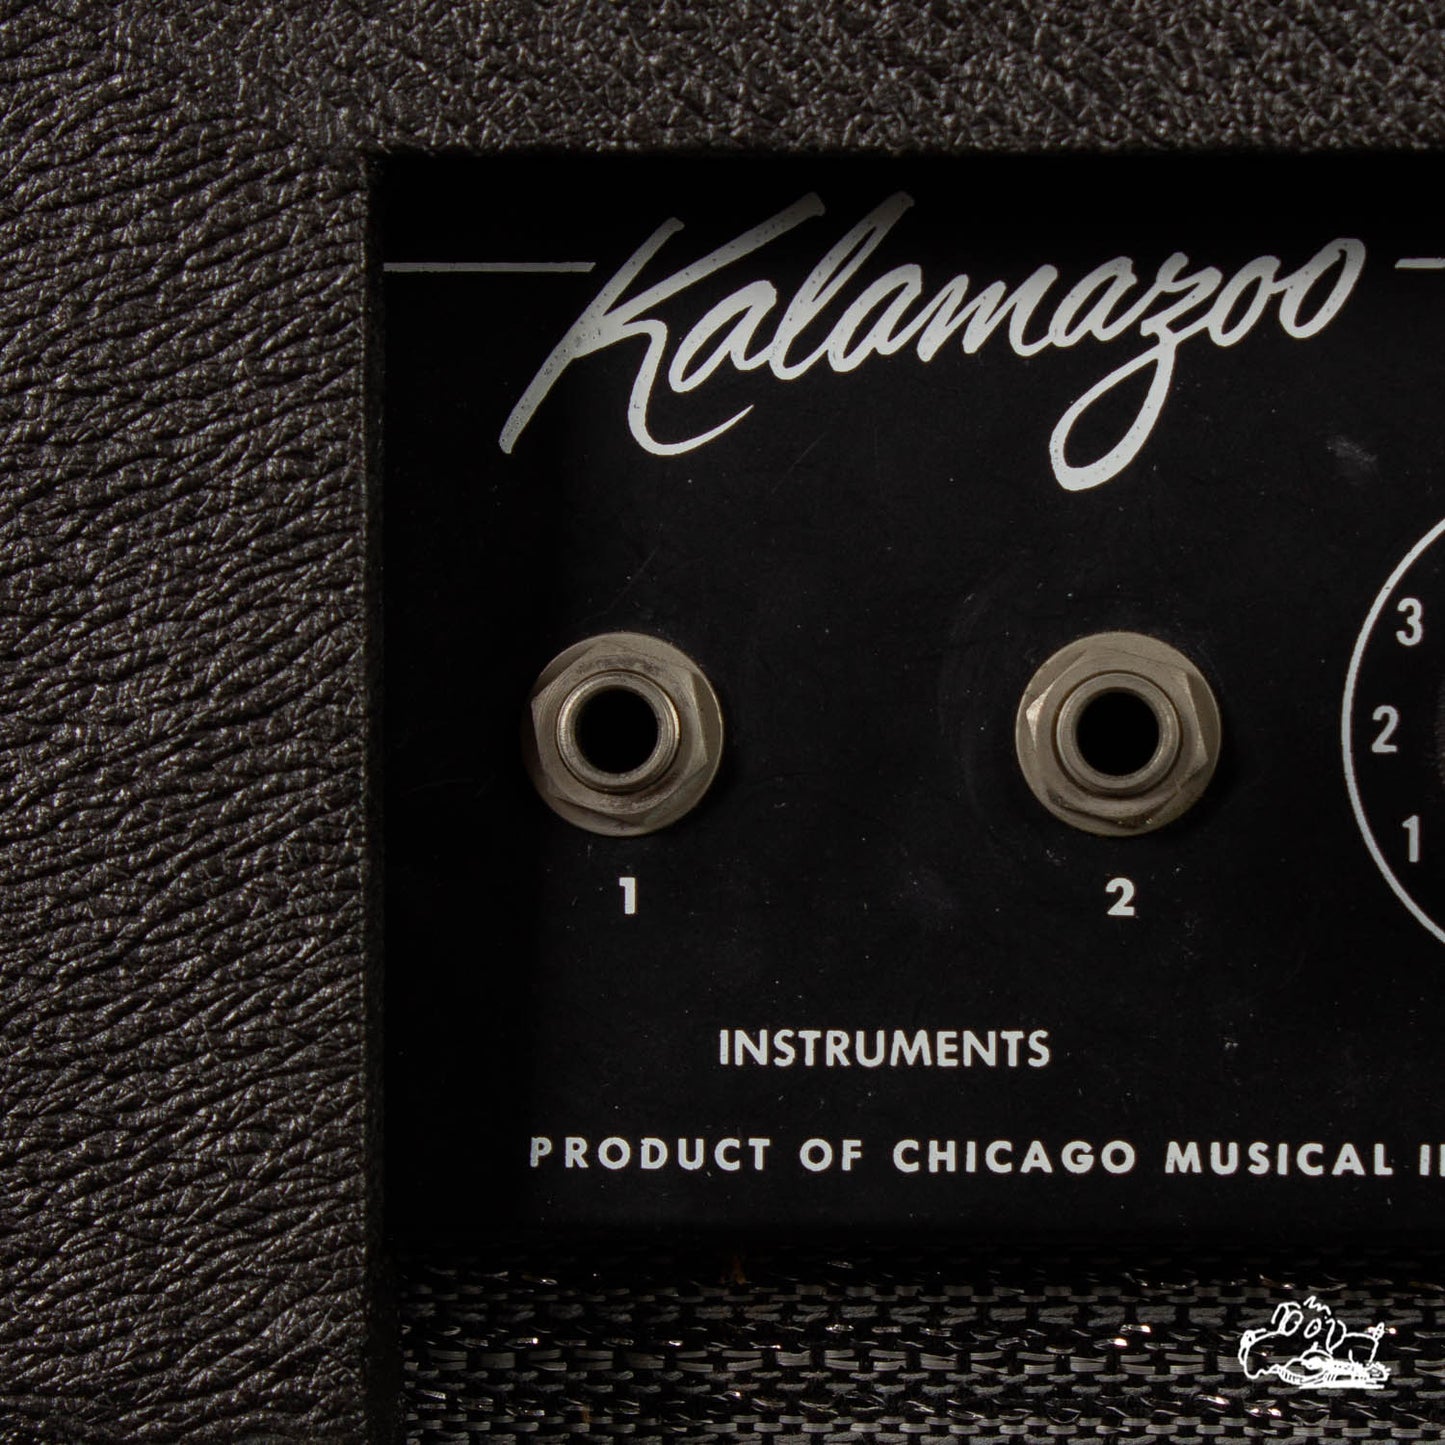 1965 Kalamazoo Model 2 Amplifier